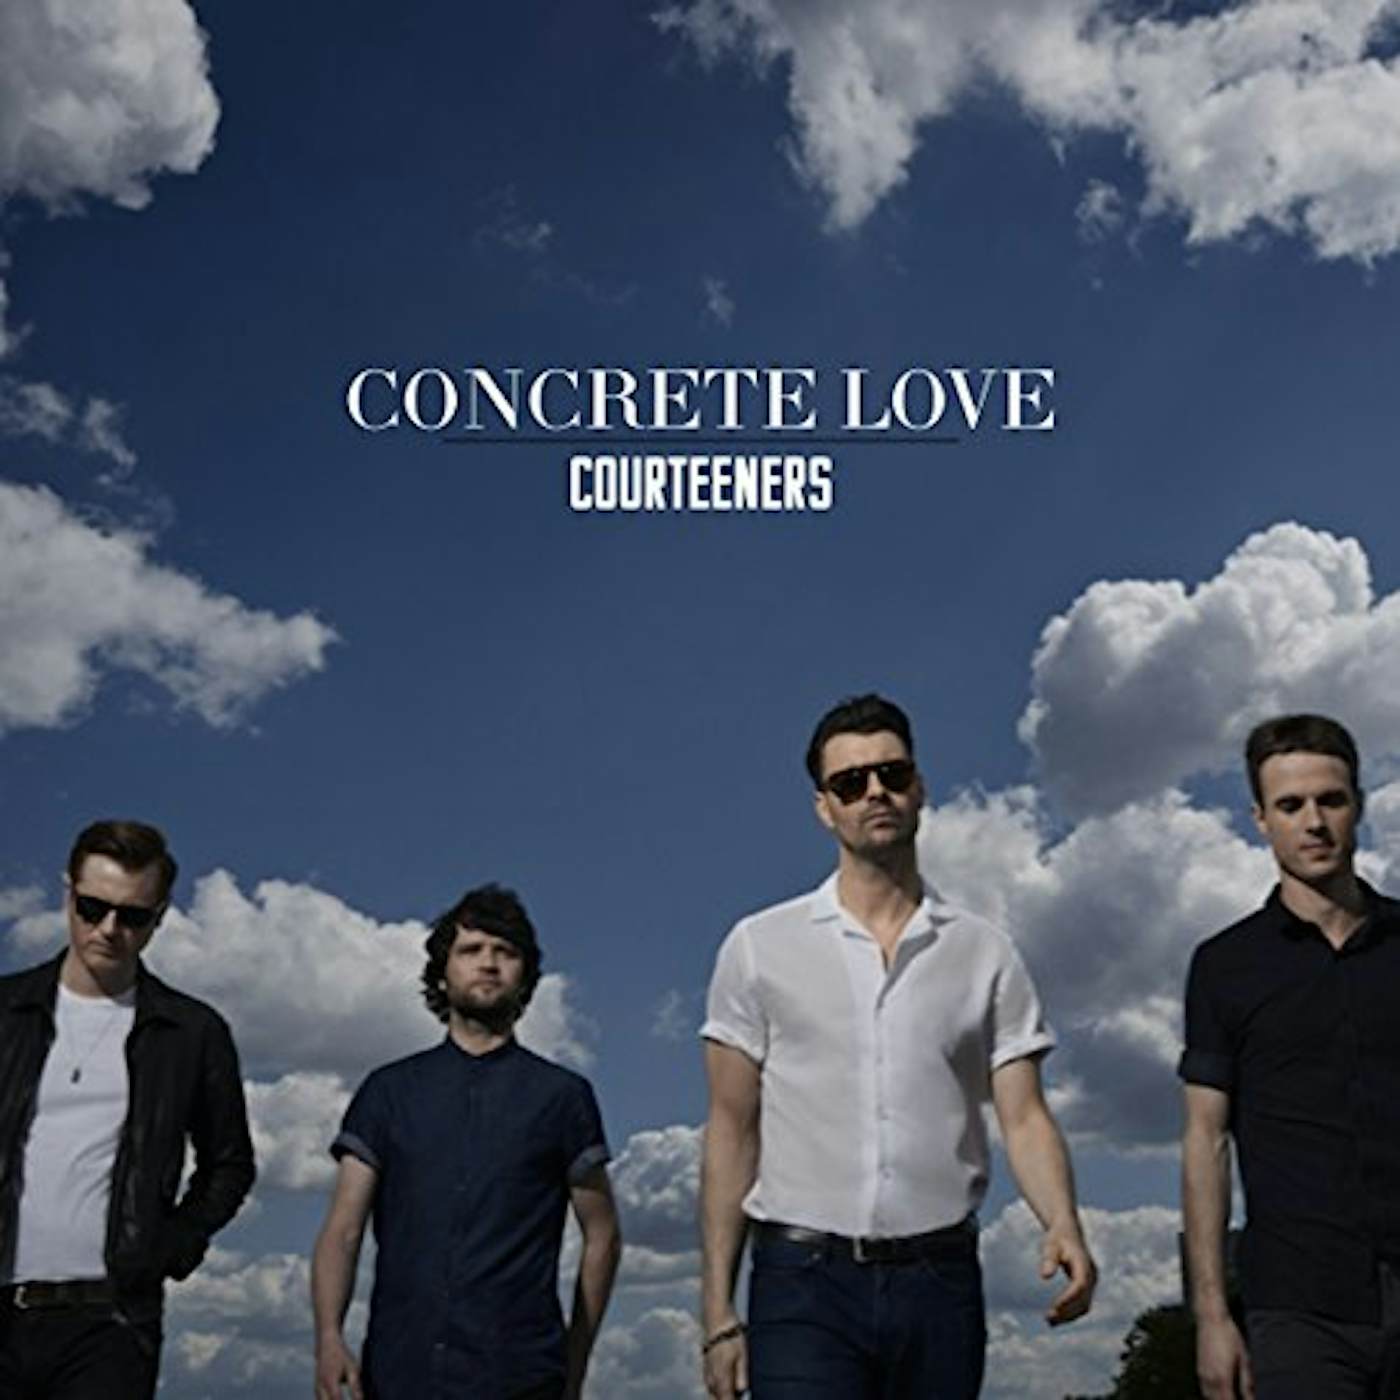 Courteeners CONCRETE LOVE Vinyl Record - UK Release